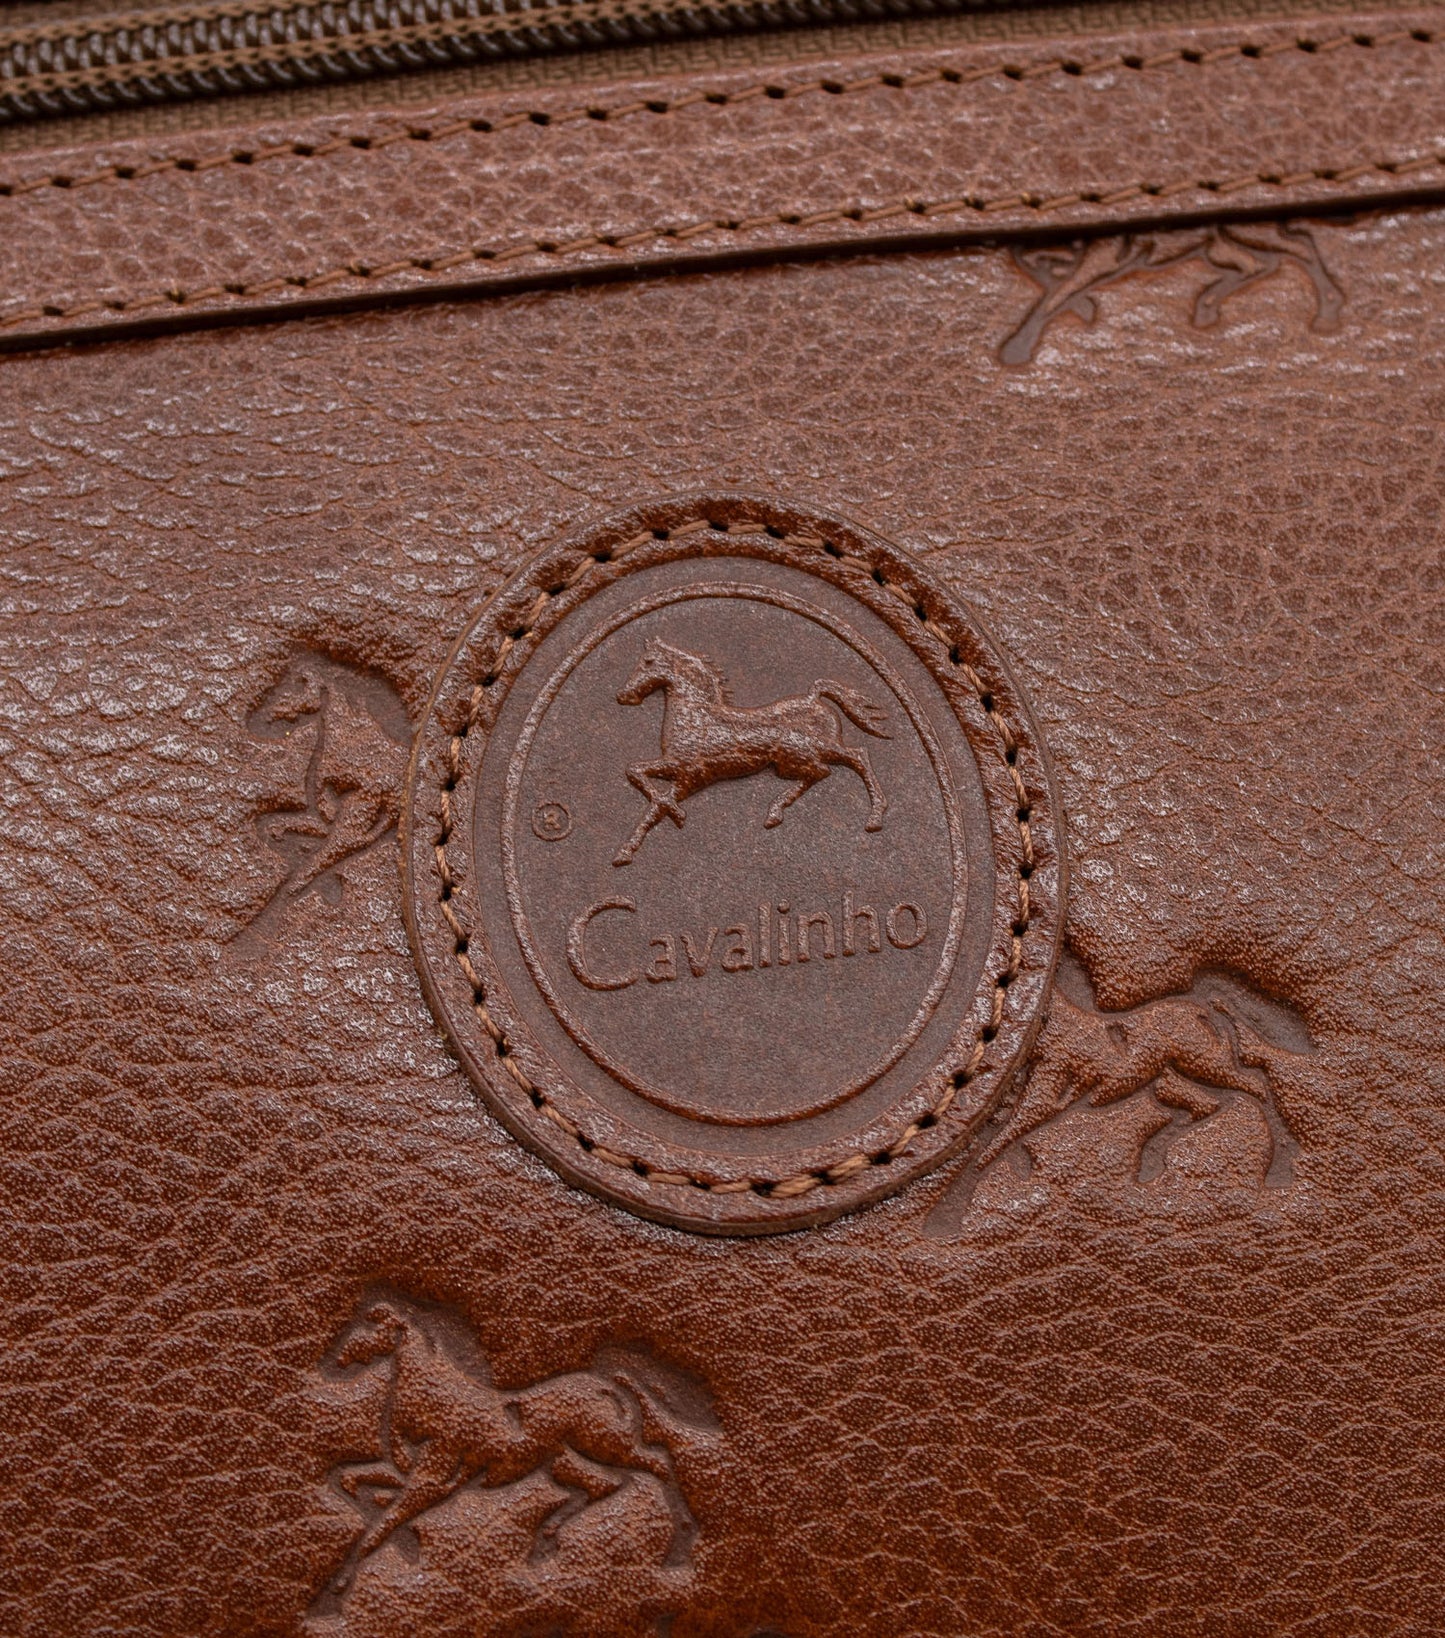 Cavalinho Cavalo Lusitano Leather Crossbody Bag - SaddleBrown - 18090190.13_P05